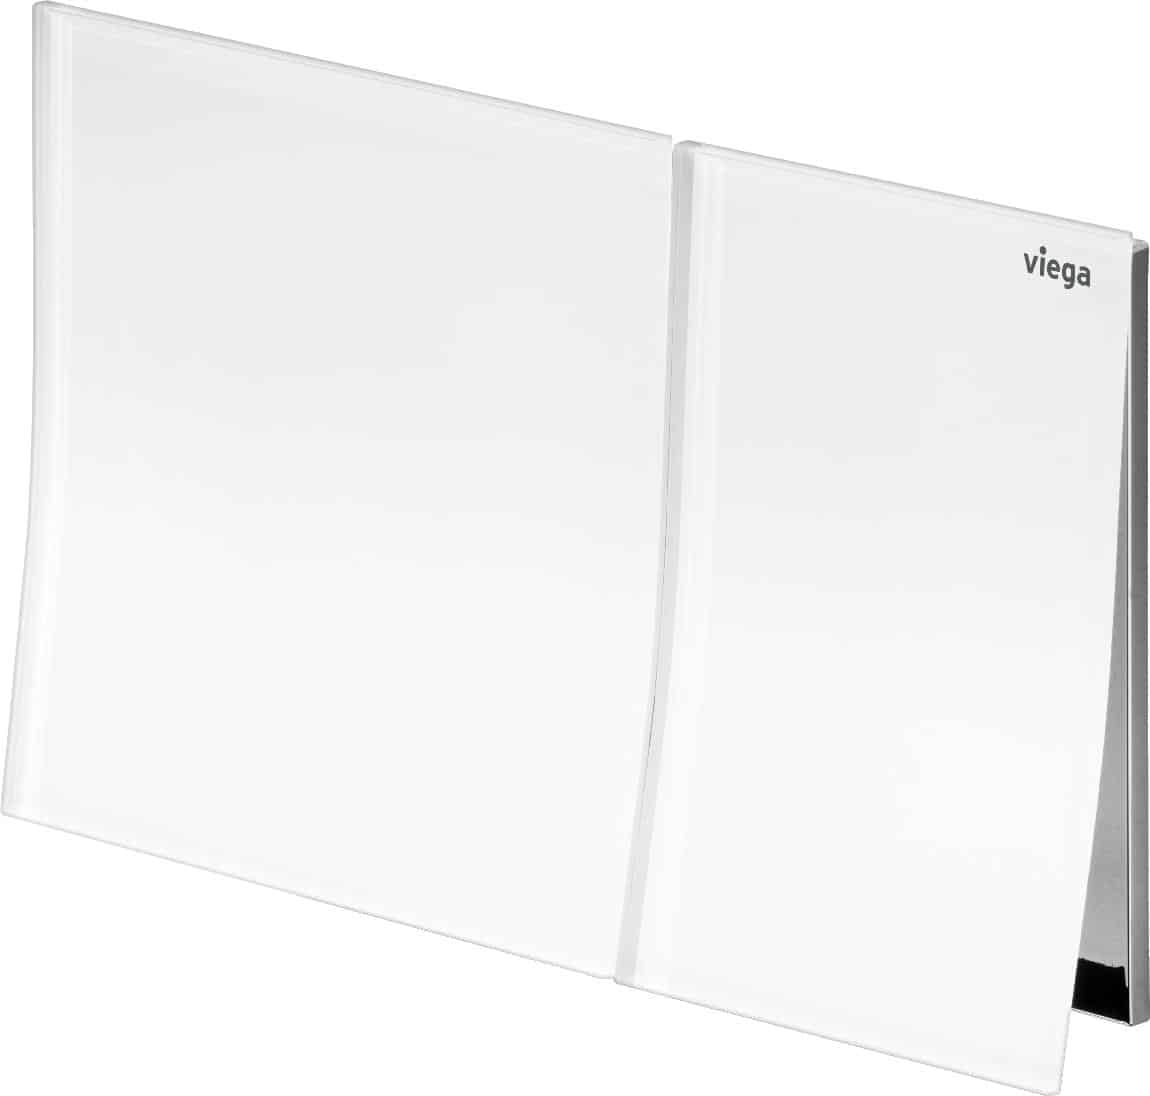 Viega More 200 Flush Plate